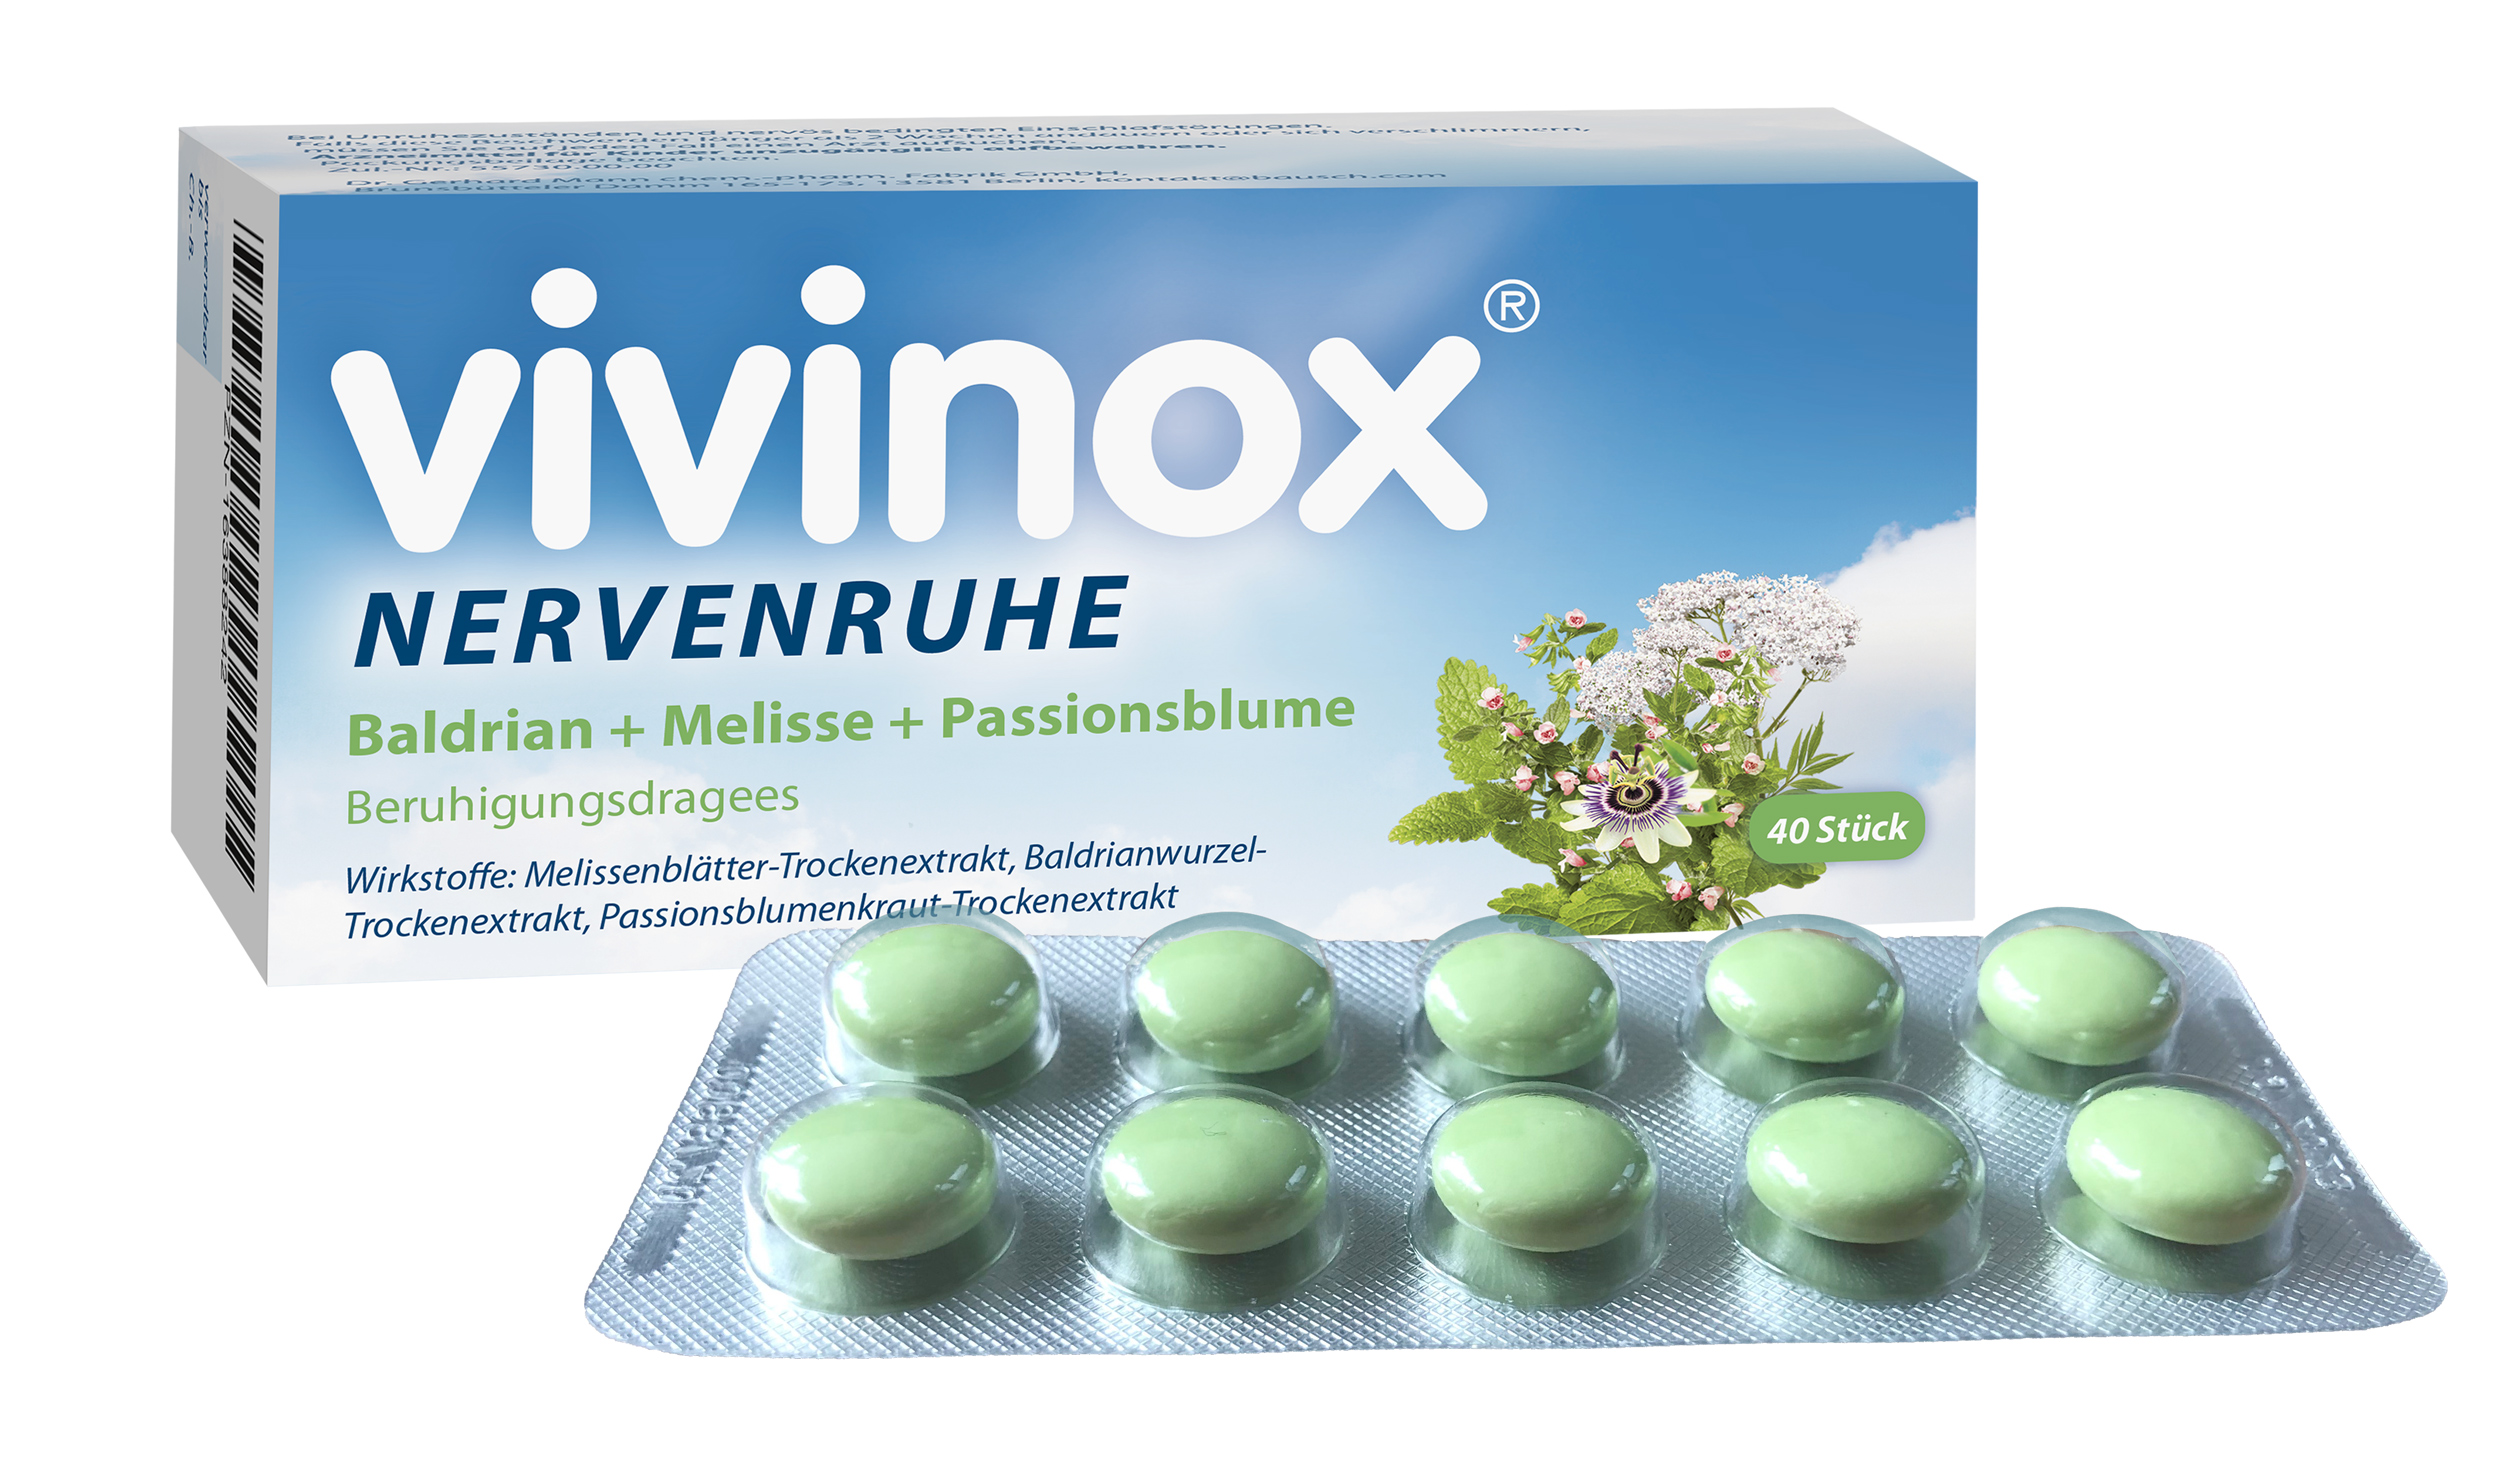 VIVINOX® NERVENRUHE BALDRIAN + MELISSE + PASSIONSBLUME BERUHIGUNGSDRAGEES